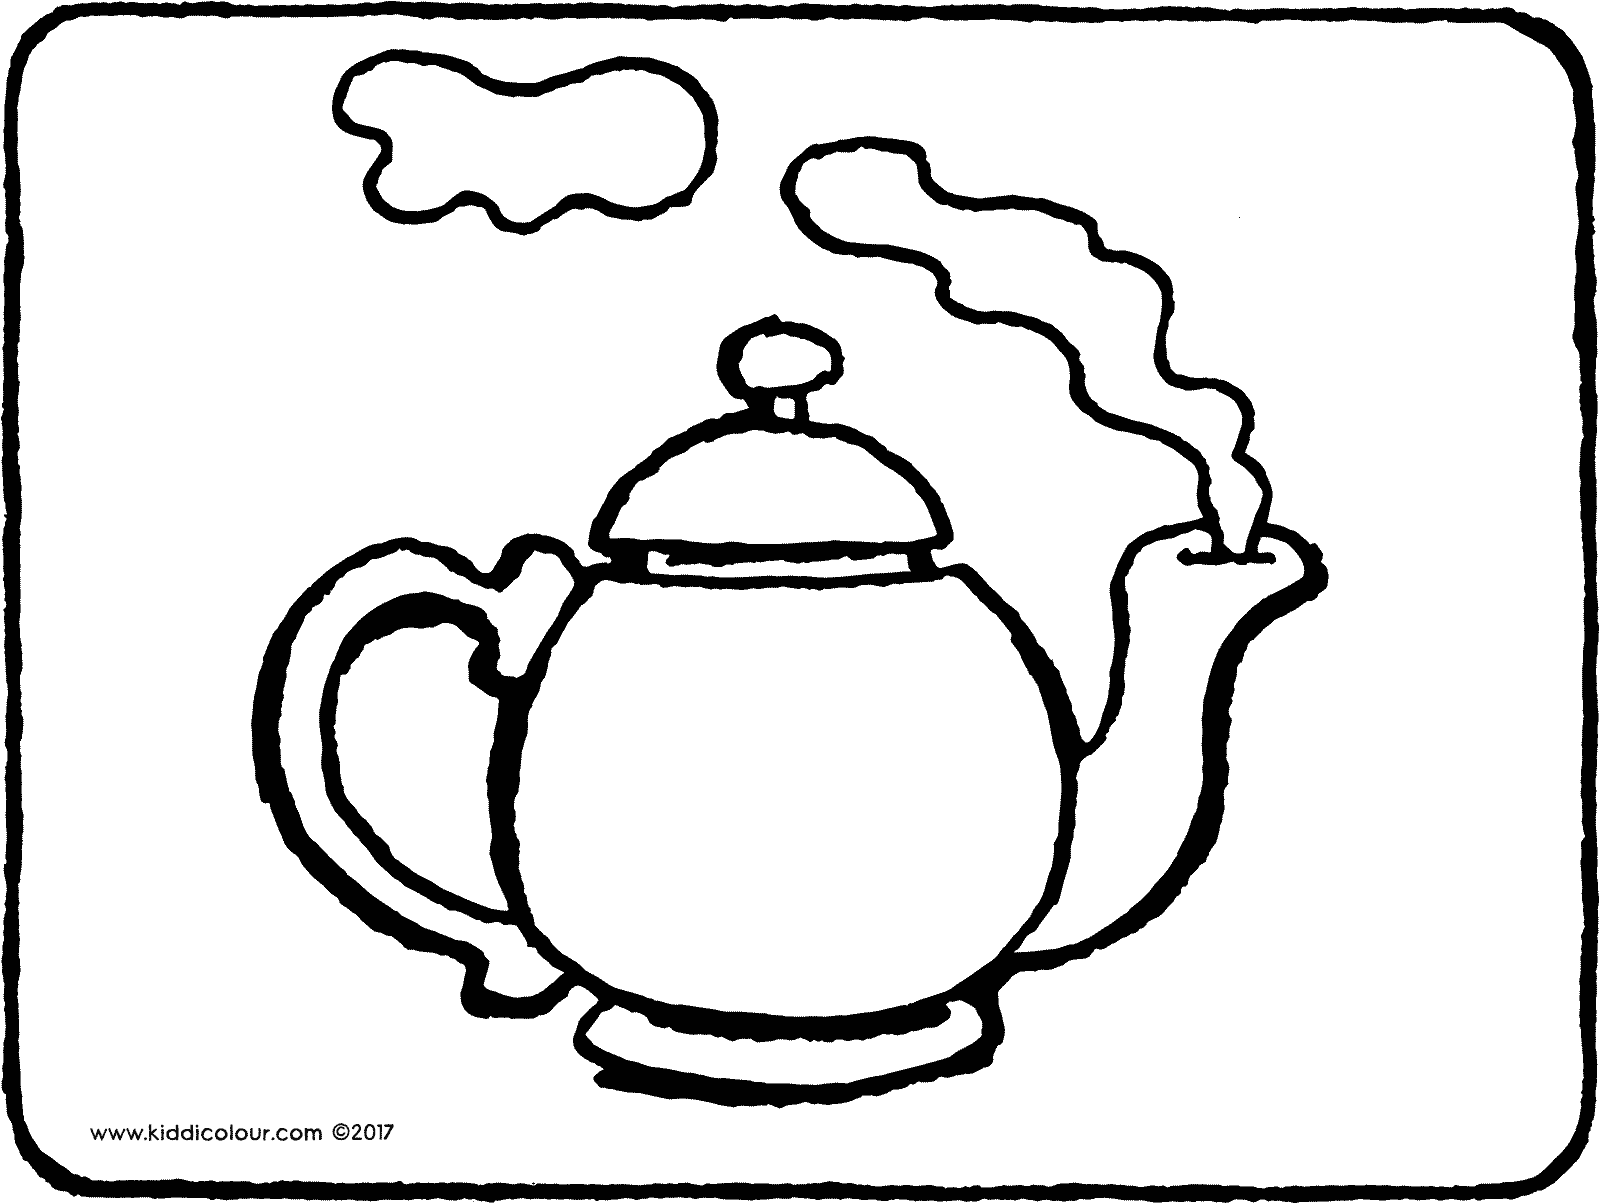 Чайник картинка для детей раскраска. Раскраска чайник и чашка для детей. Раскраска чайник для детей 3-4 лет. Чайник и Кружка раскраска. Раскраска чайник и чашка с блюдцем.